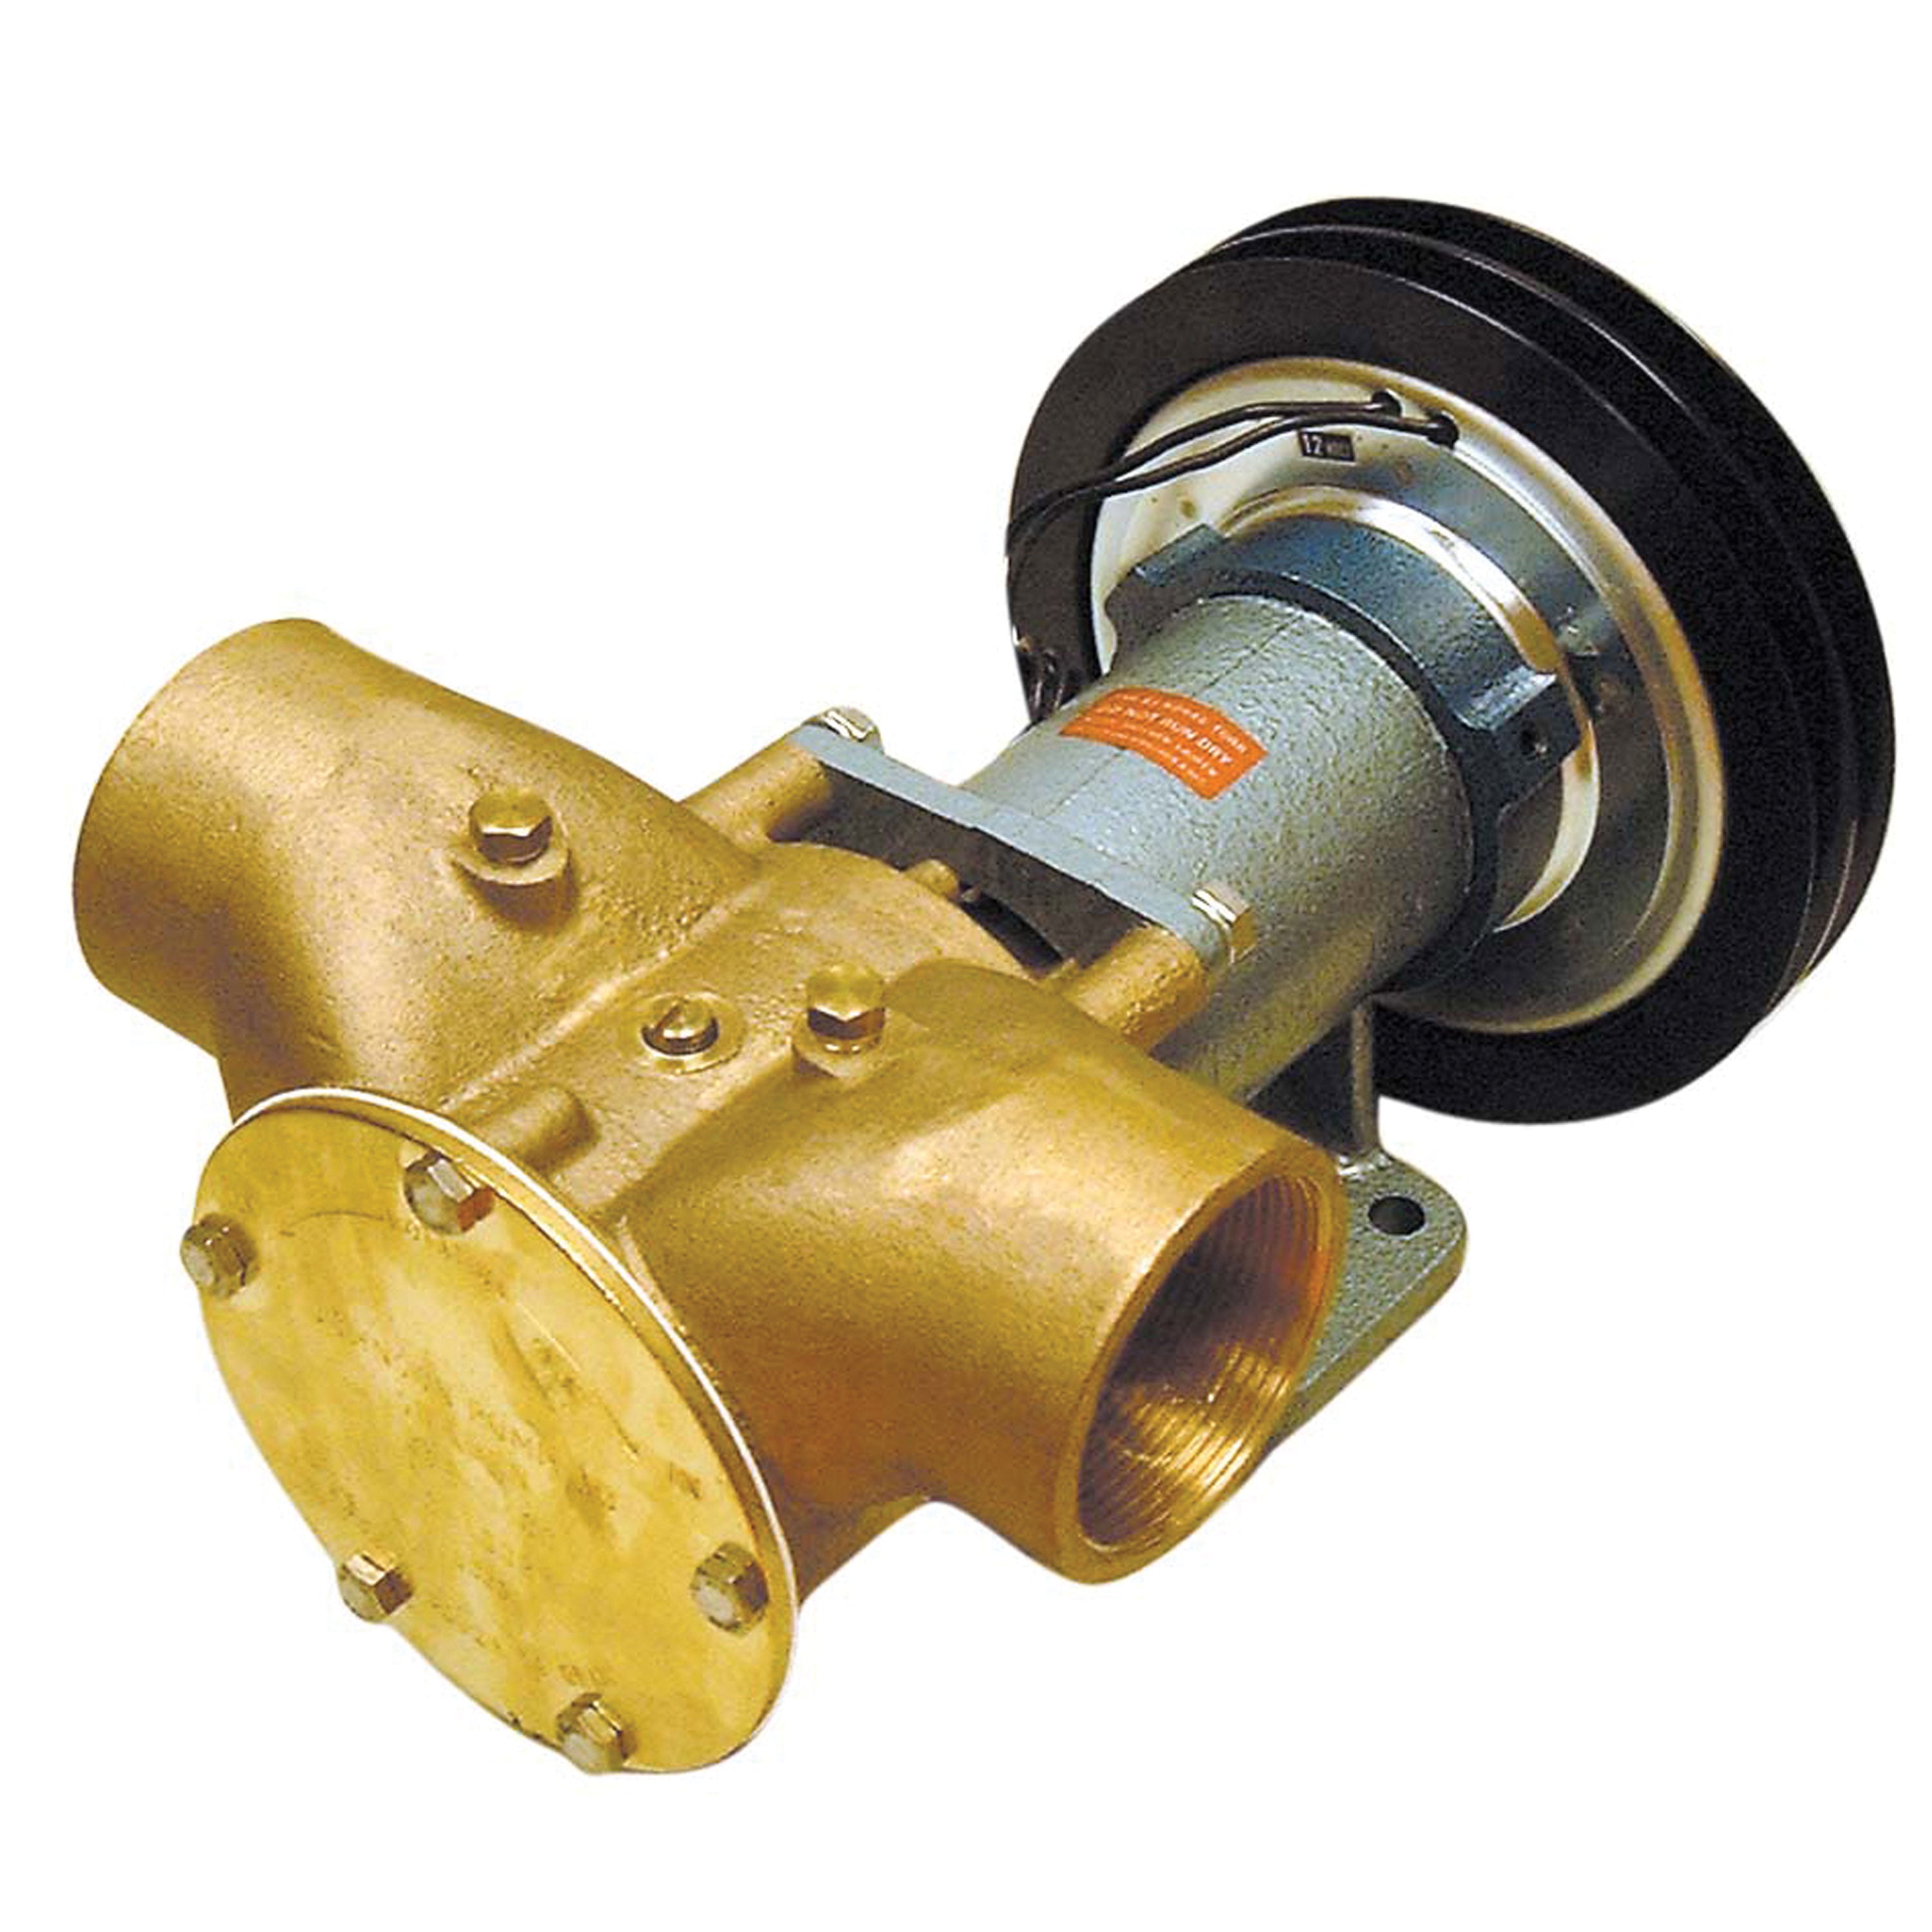 Johnson Pump 10-13027-98 F9B-5 Flexible Impeller Pump with Electromagnetic Clutch